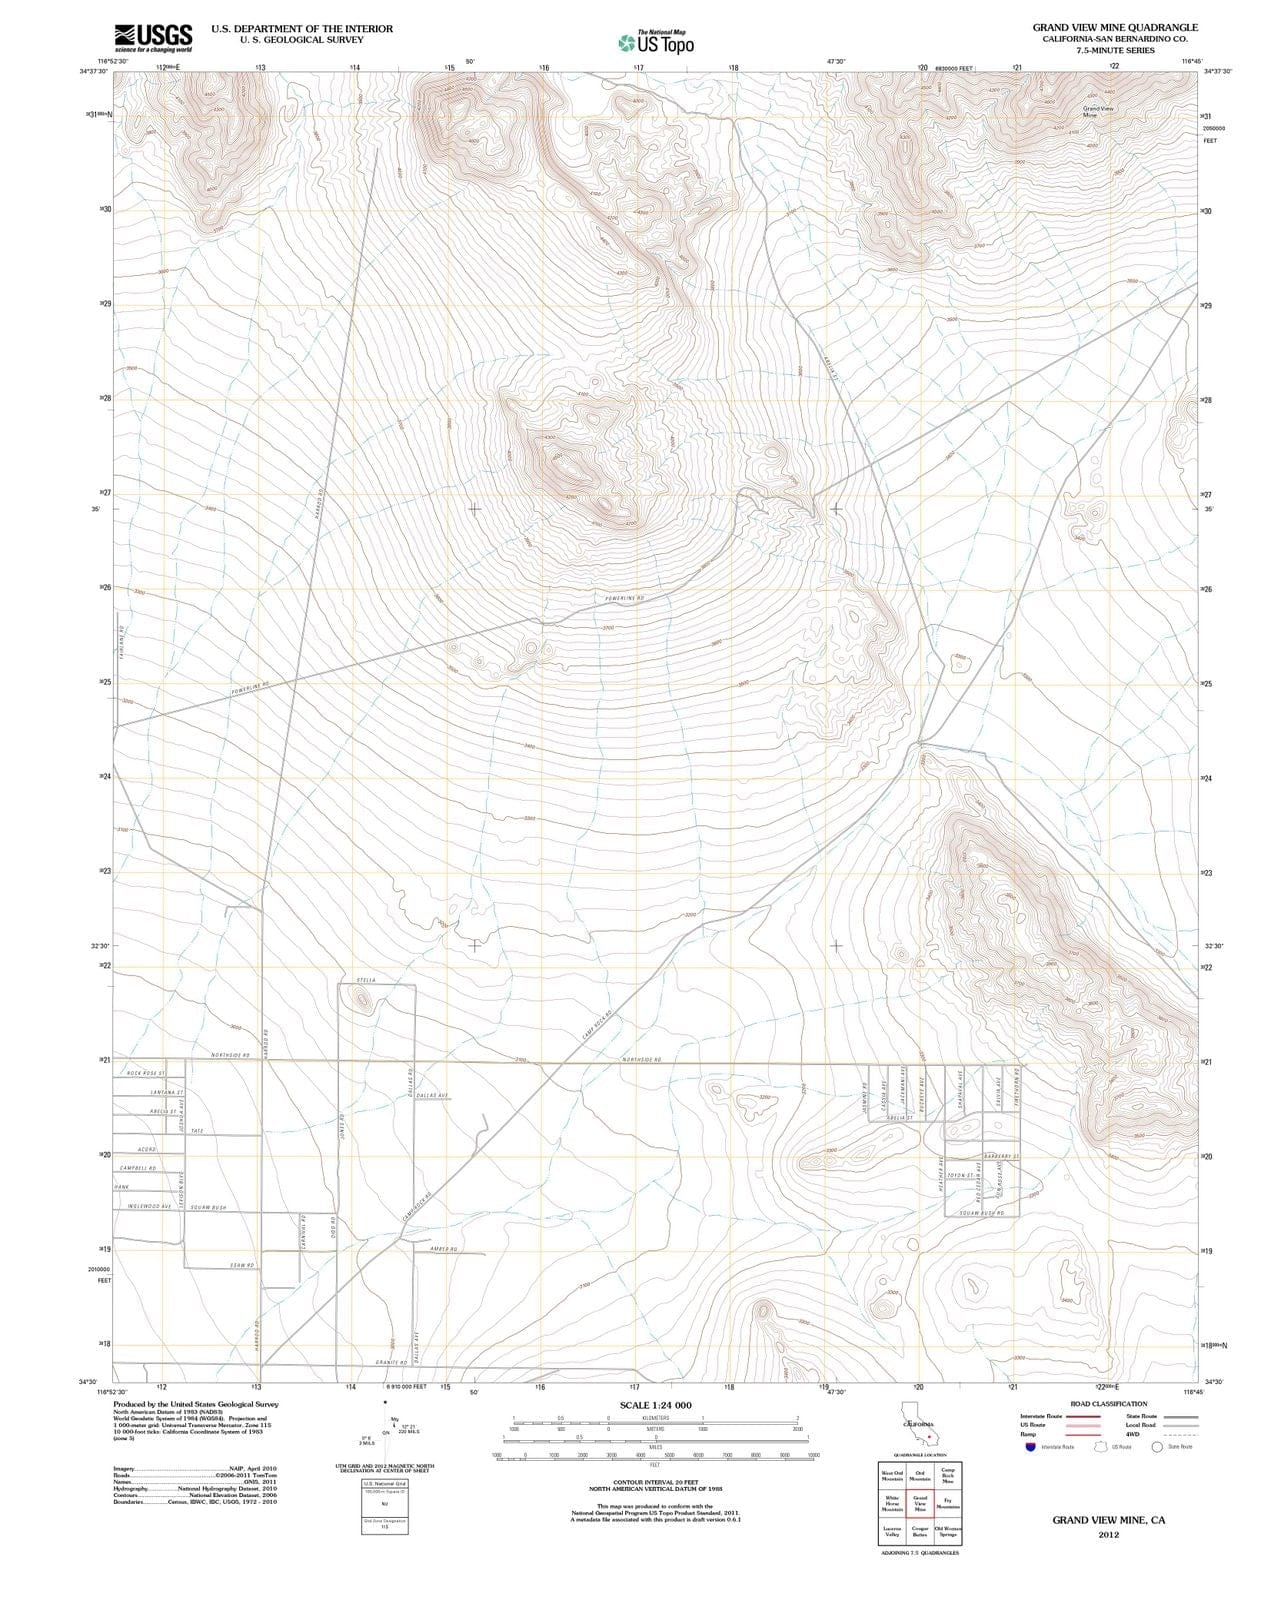 2012 Grand View Mine, CA - California - USGS Topographic Map